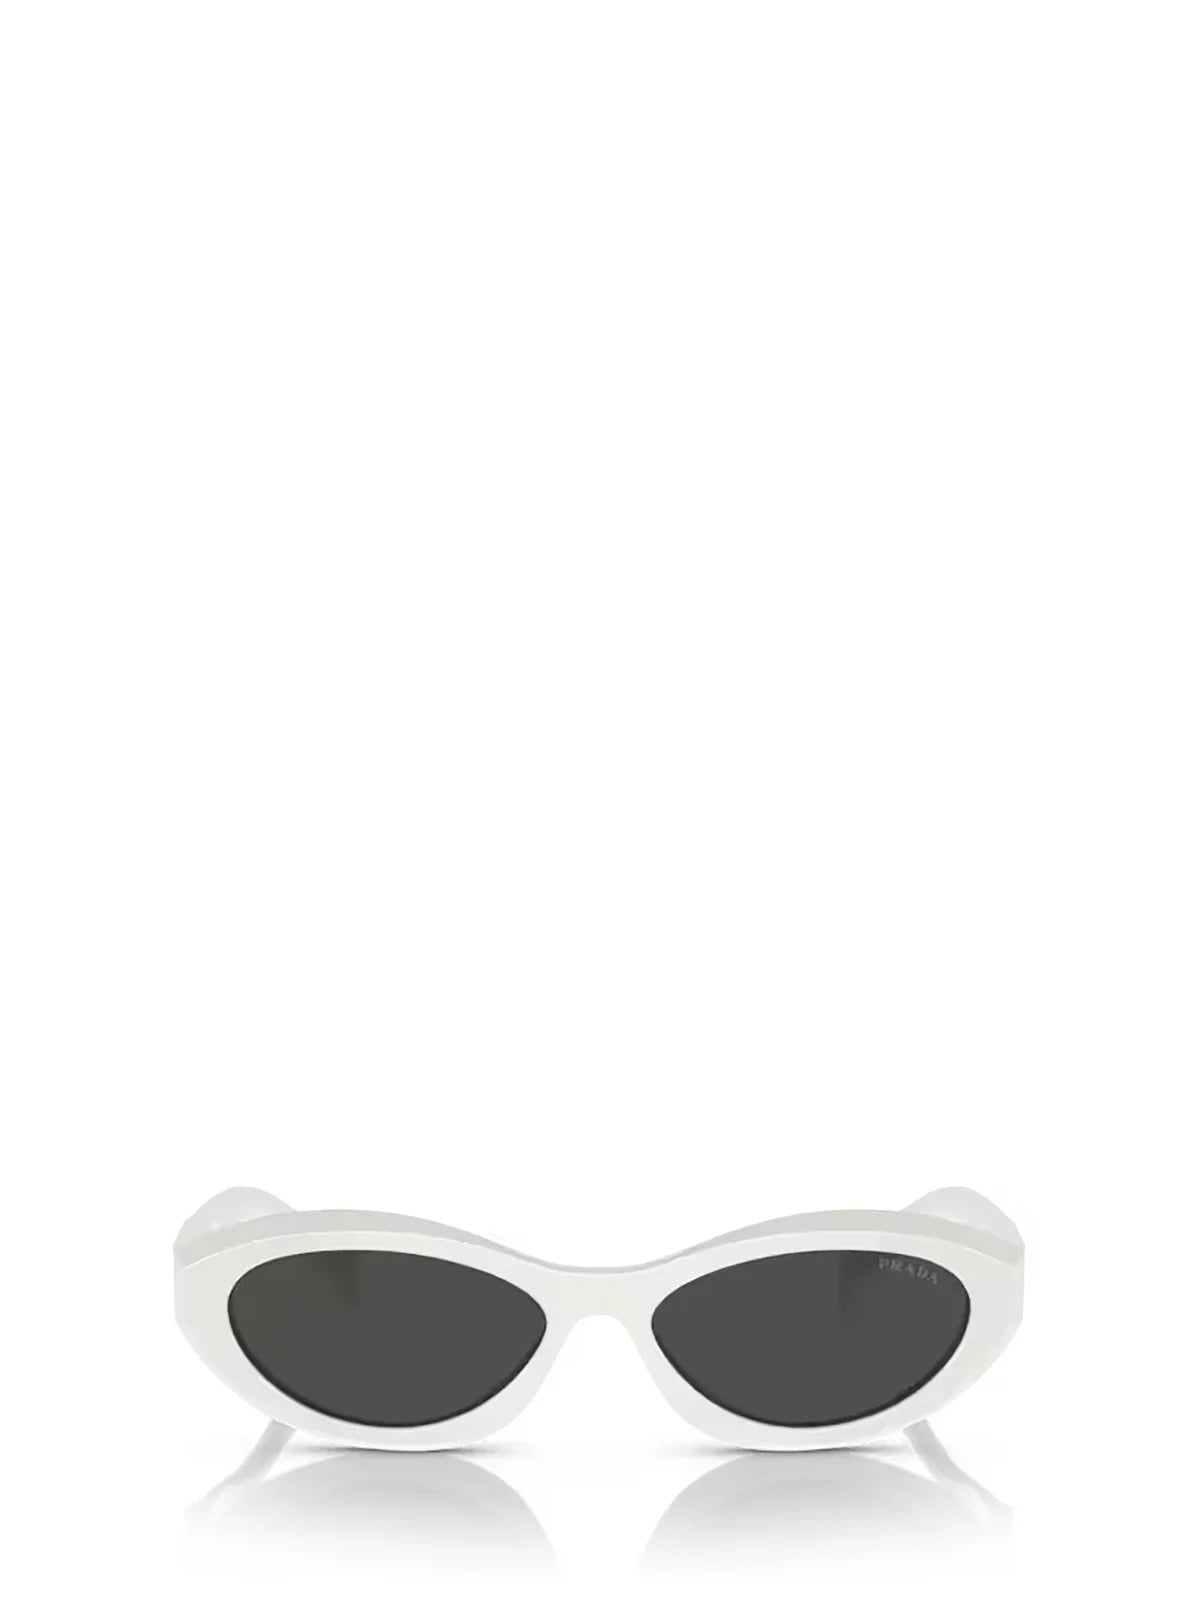 Prada Oval Sunglasses White Talc 0PR 26ZS